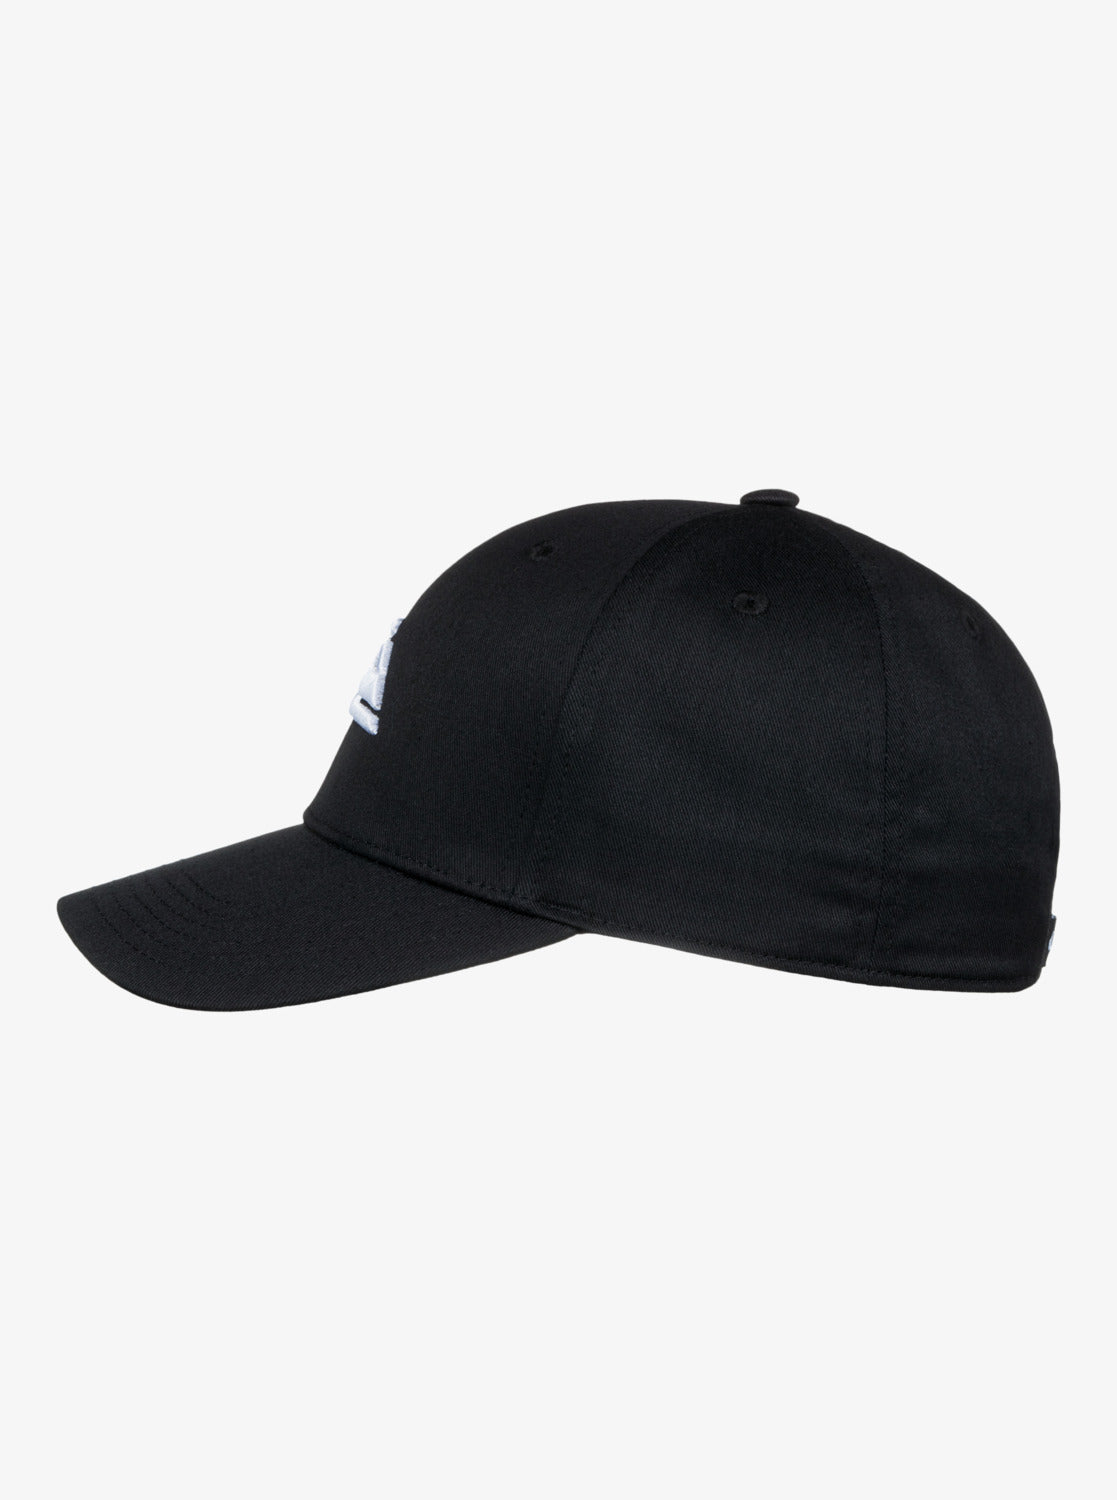 Quiksilver Decades Snapback Cap in Black